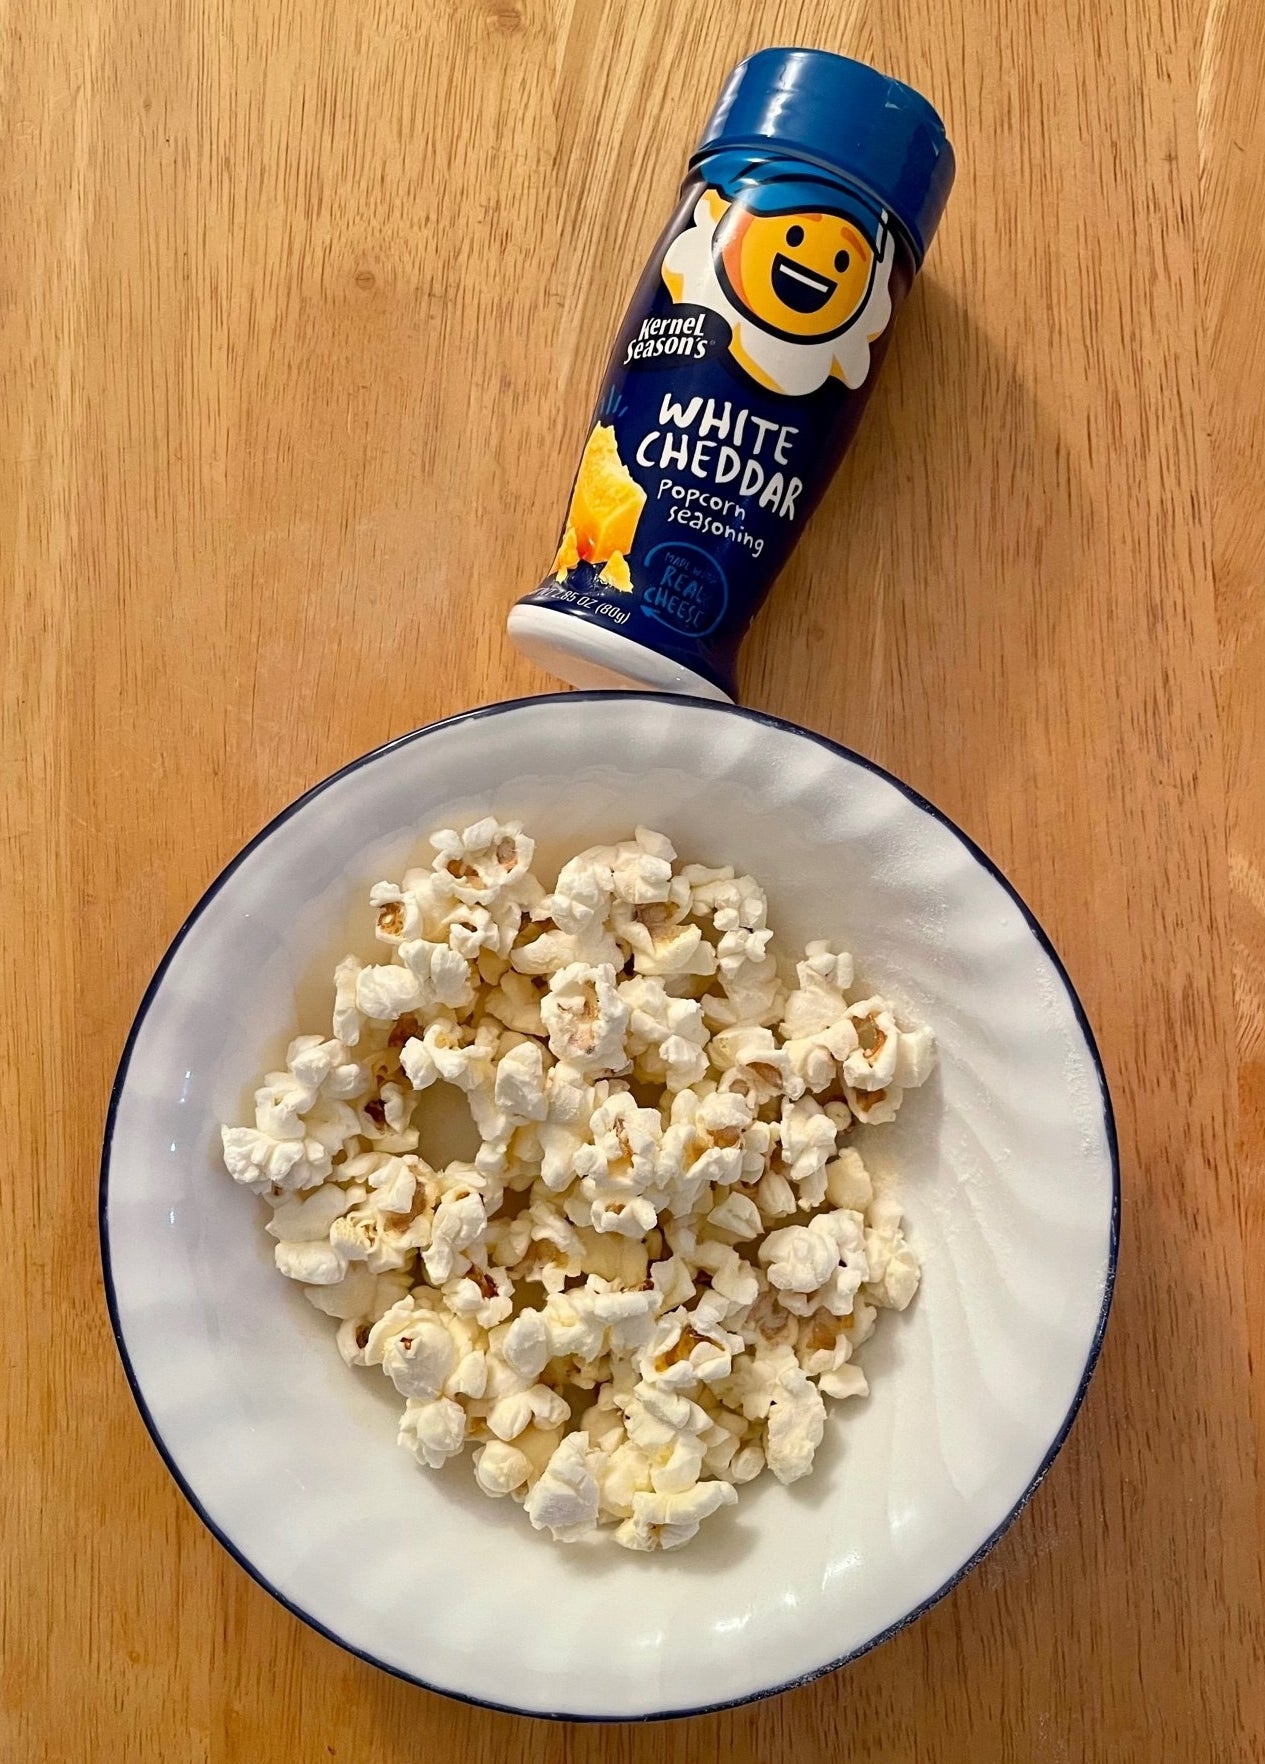 Popcorn with White Cheddar Popcorn Seasoning